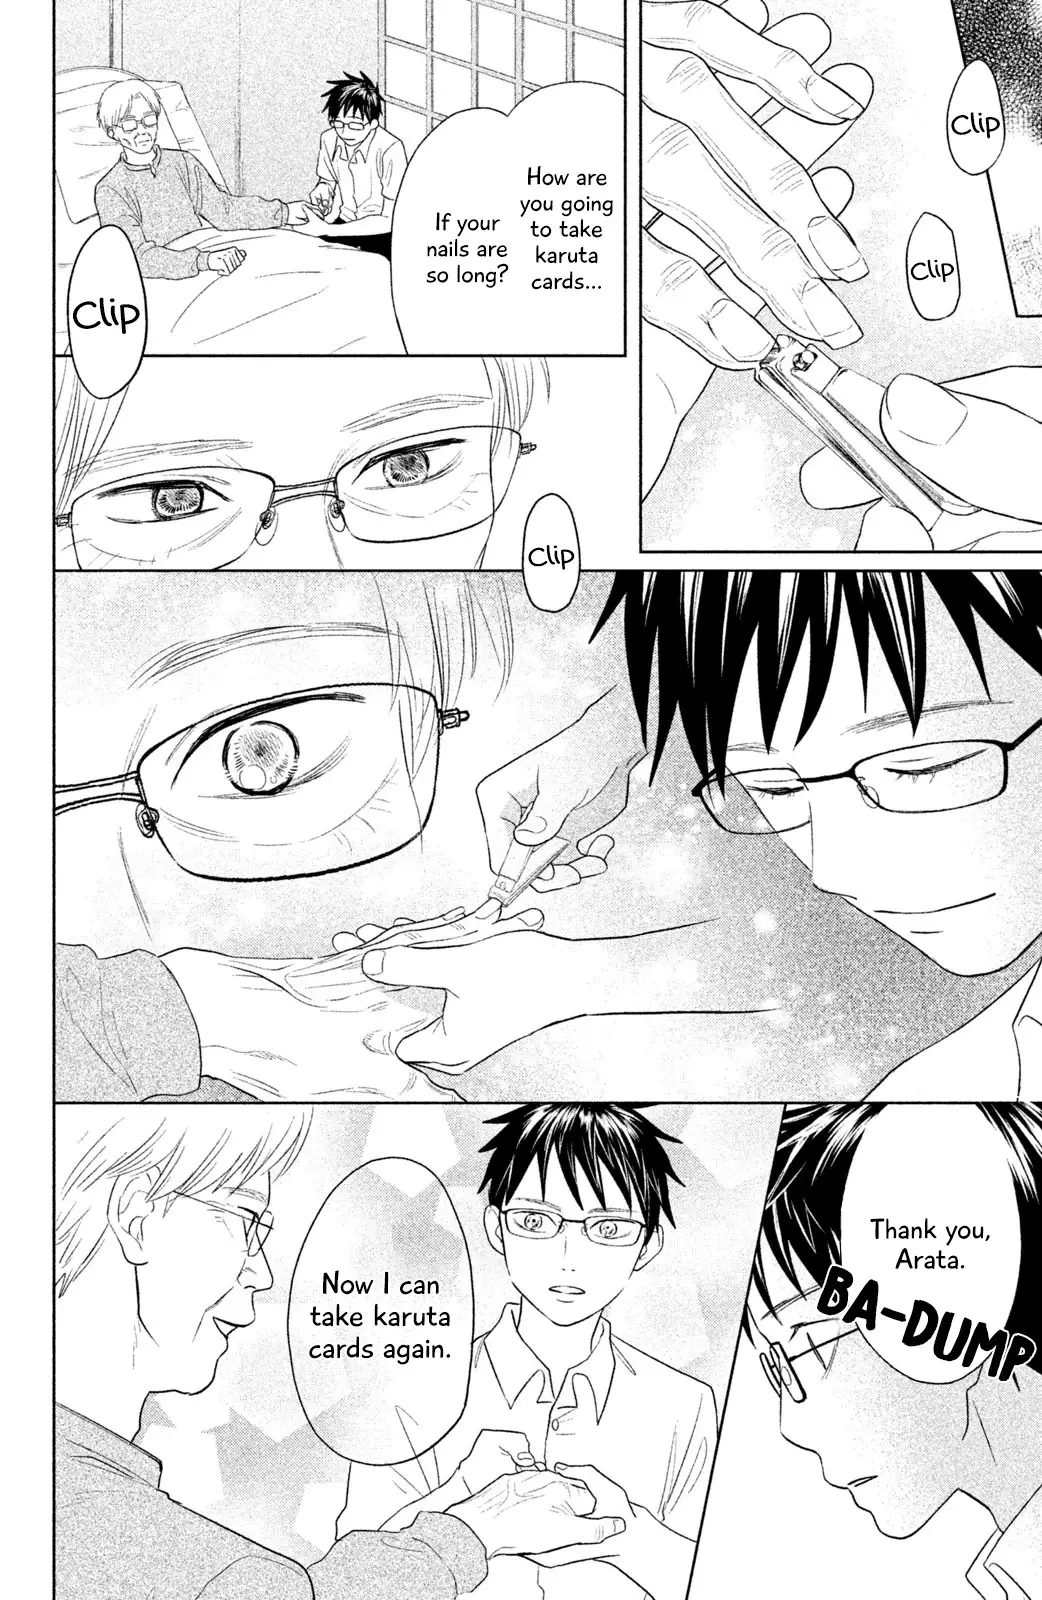 Chihayafuru: Middle School Arc - 9 page 19